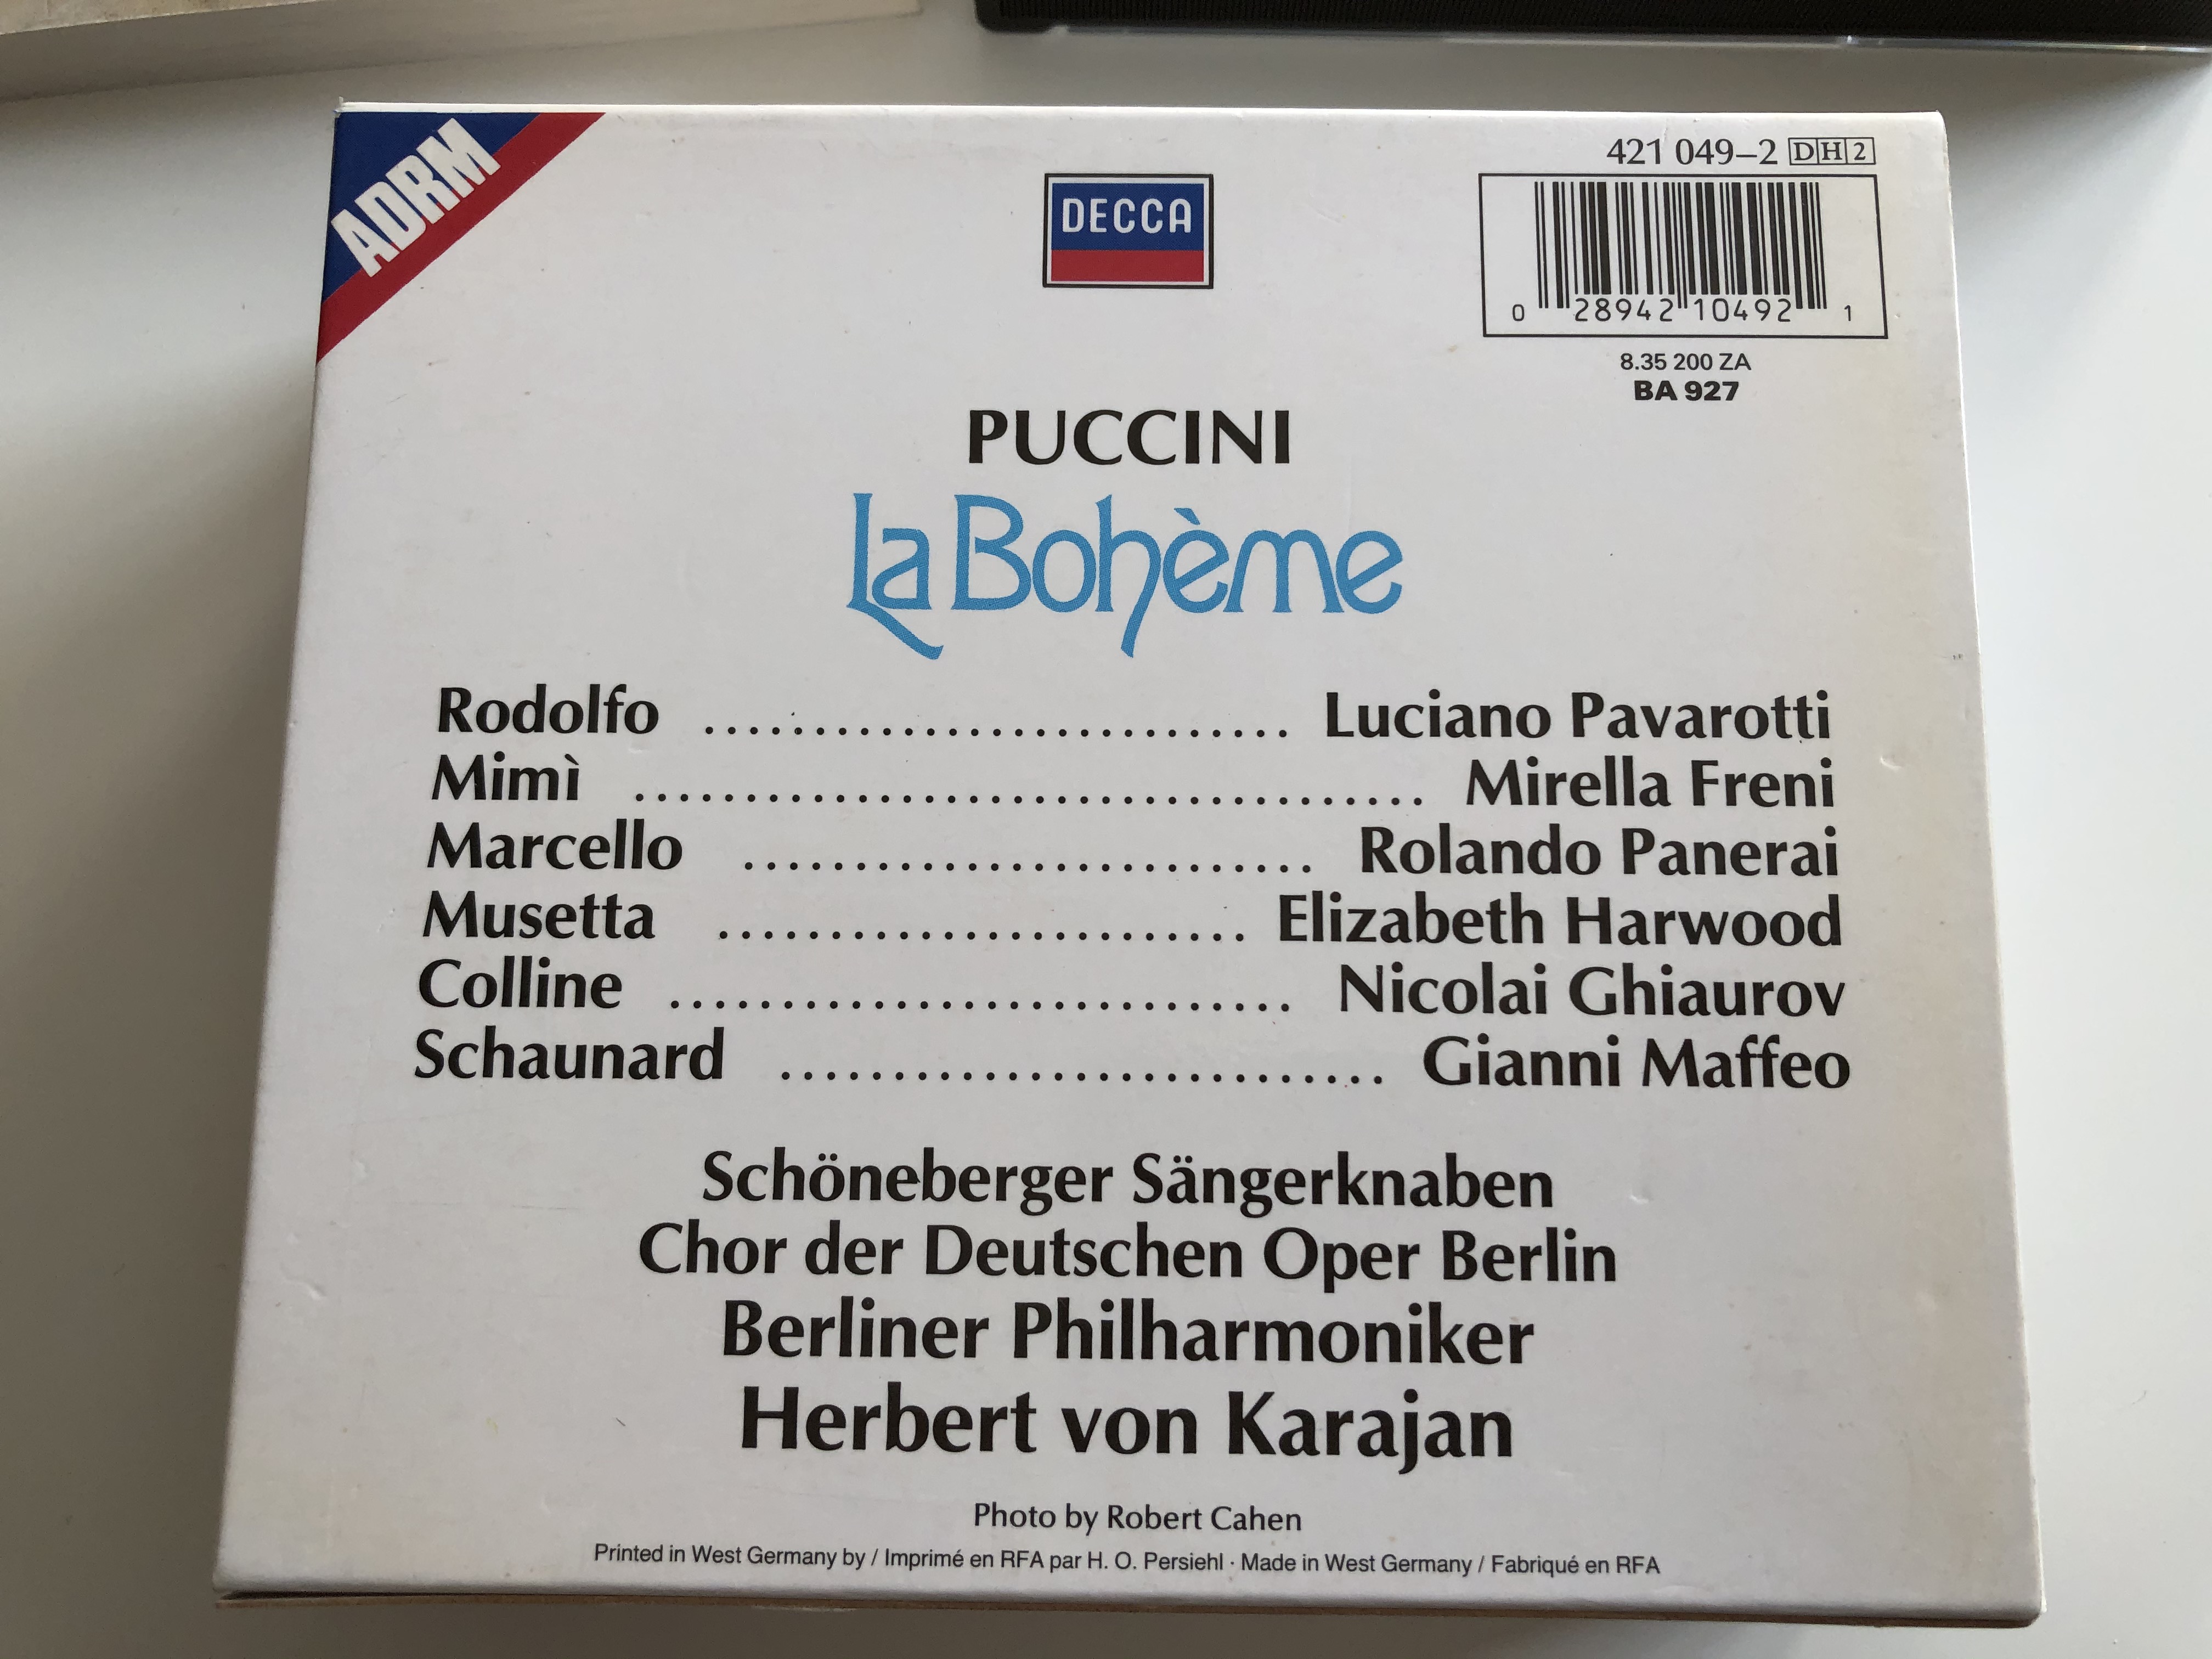 puccini-la-boh-me-freni-pavarotti-harwood-panerai-maffeo-ghiaurov-berliner-philharmoniker-herbert-karajan-decca-2x-audio-cd-stereo-421-049-2-3-.jpg